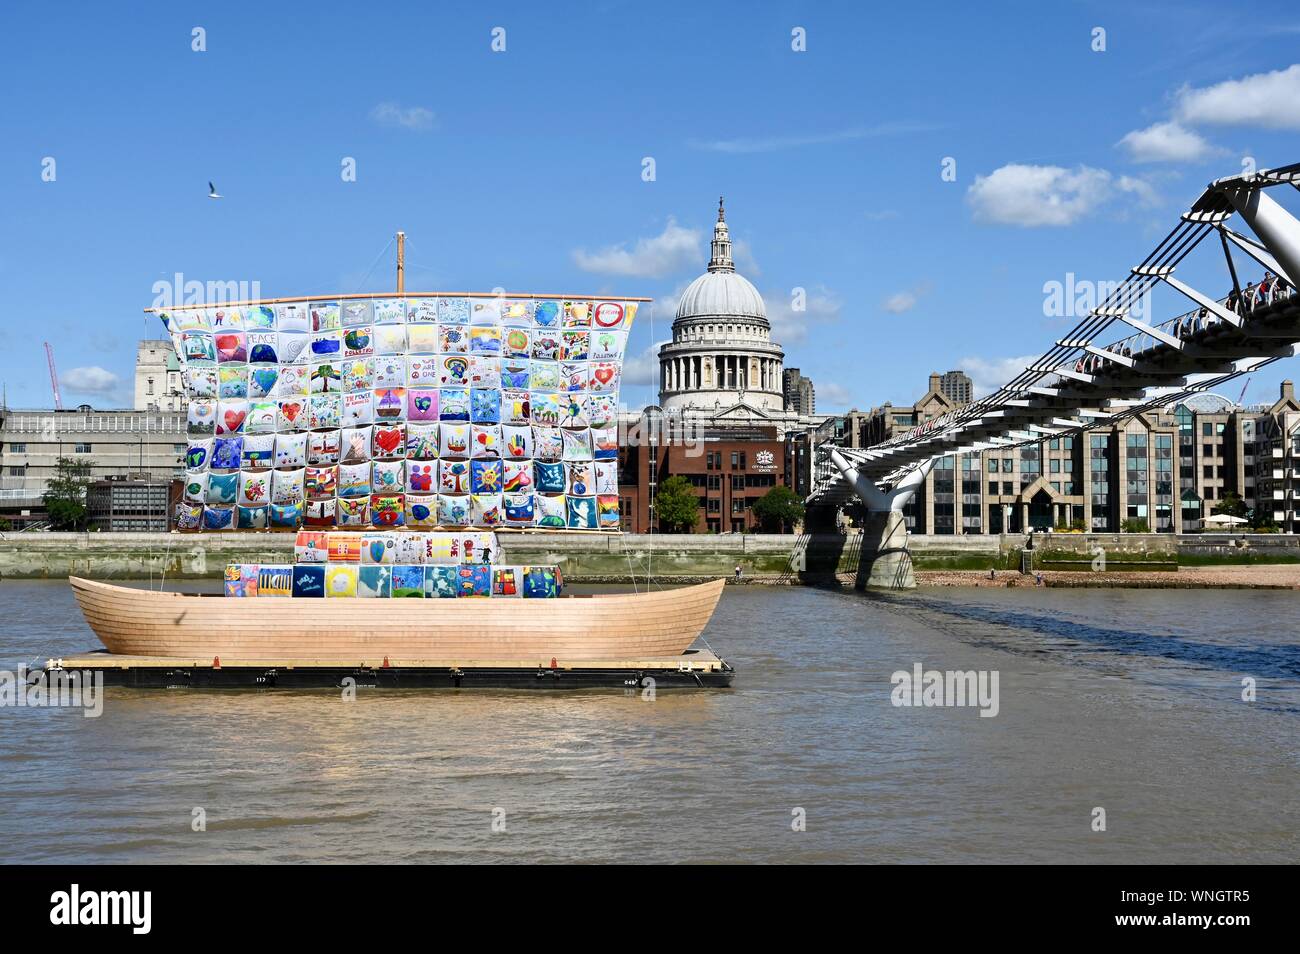 The Ship of Tolerance by Ilya and Emiia Kabakov, Tate Modern, London. UK Stock Photo